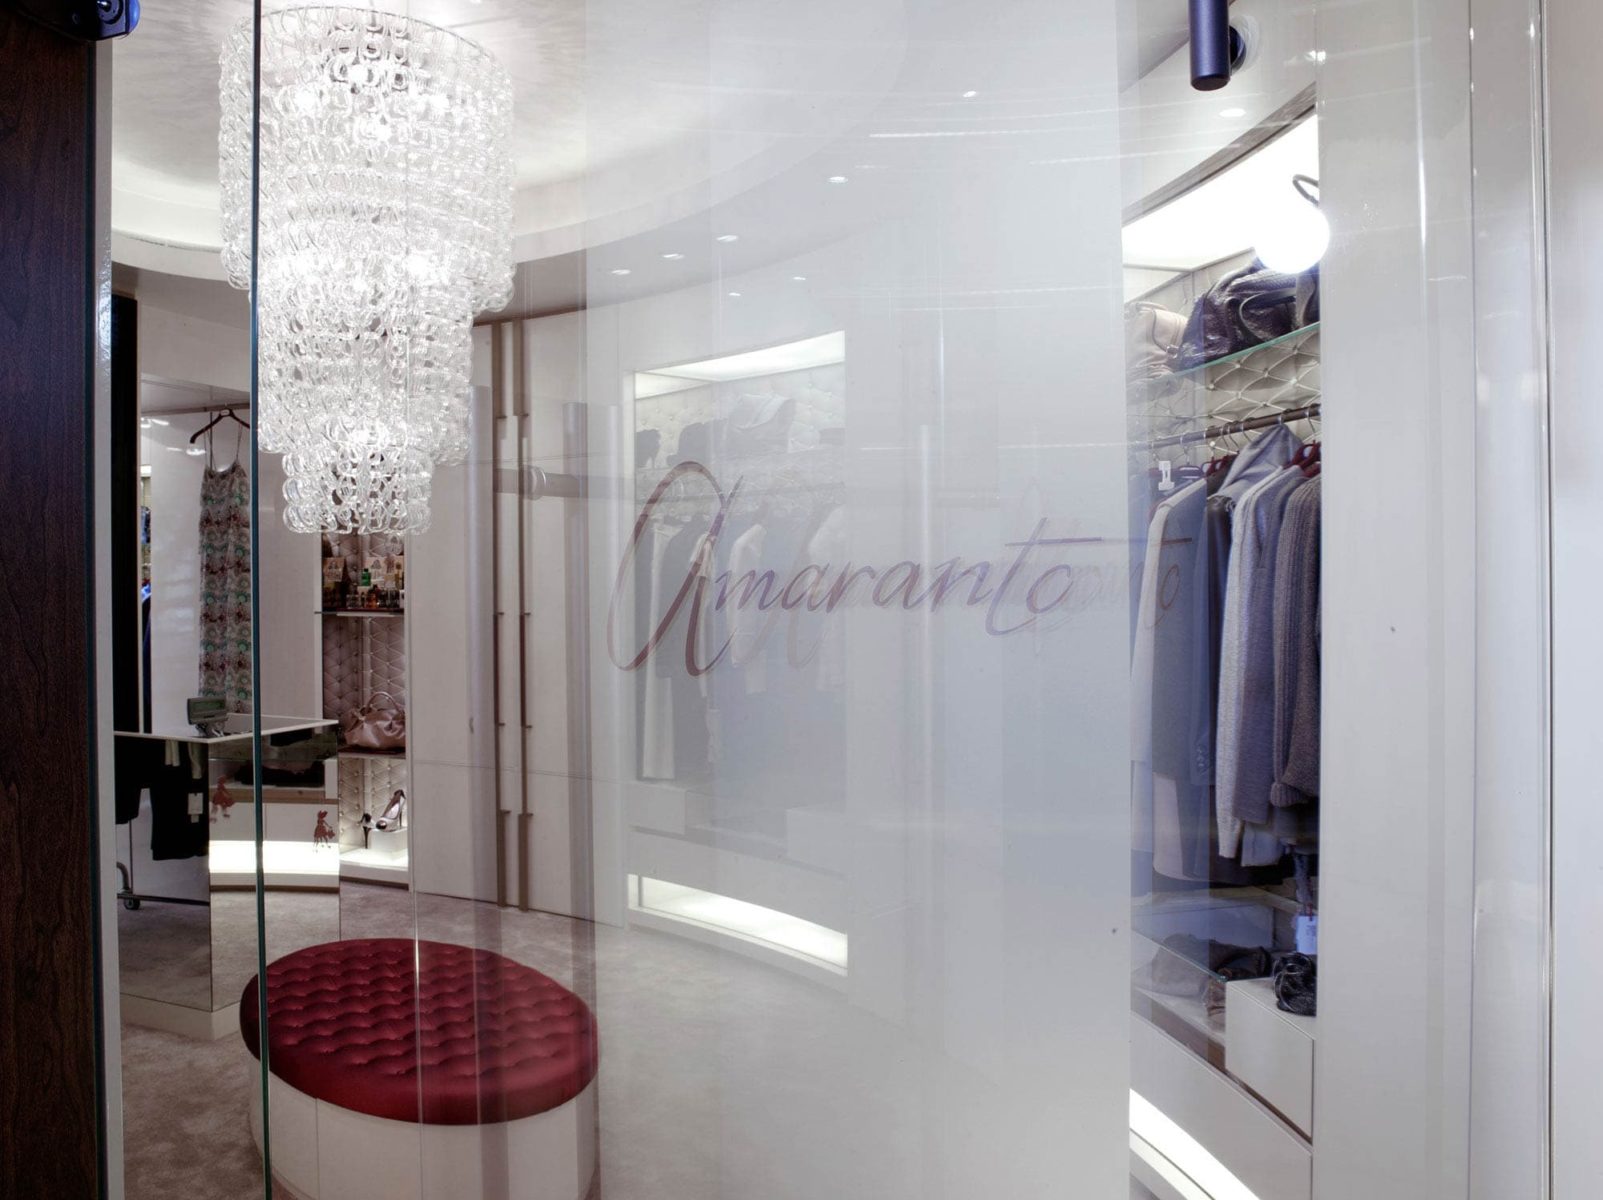 Amaranto Boutique Milan